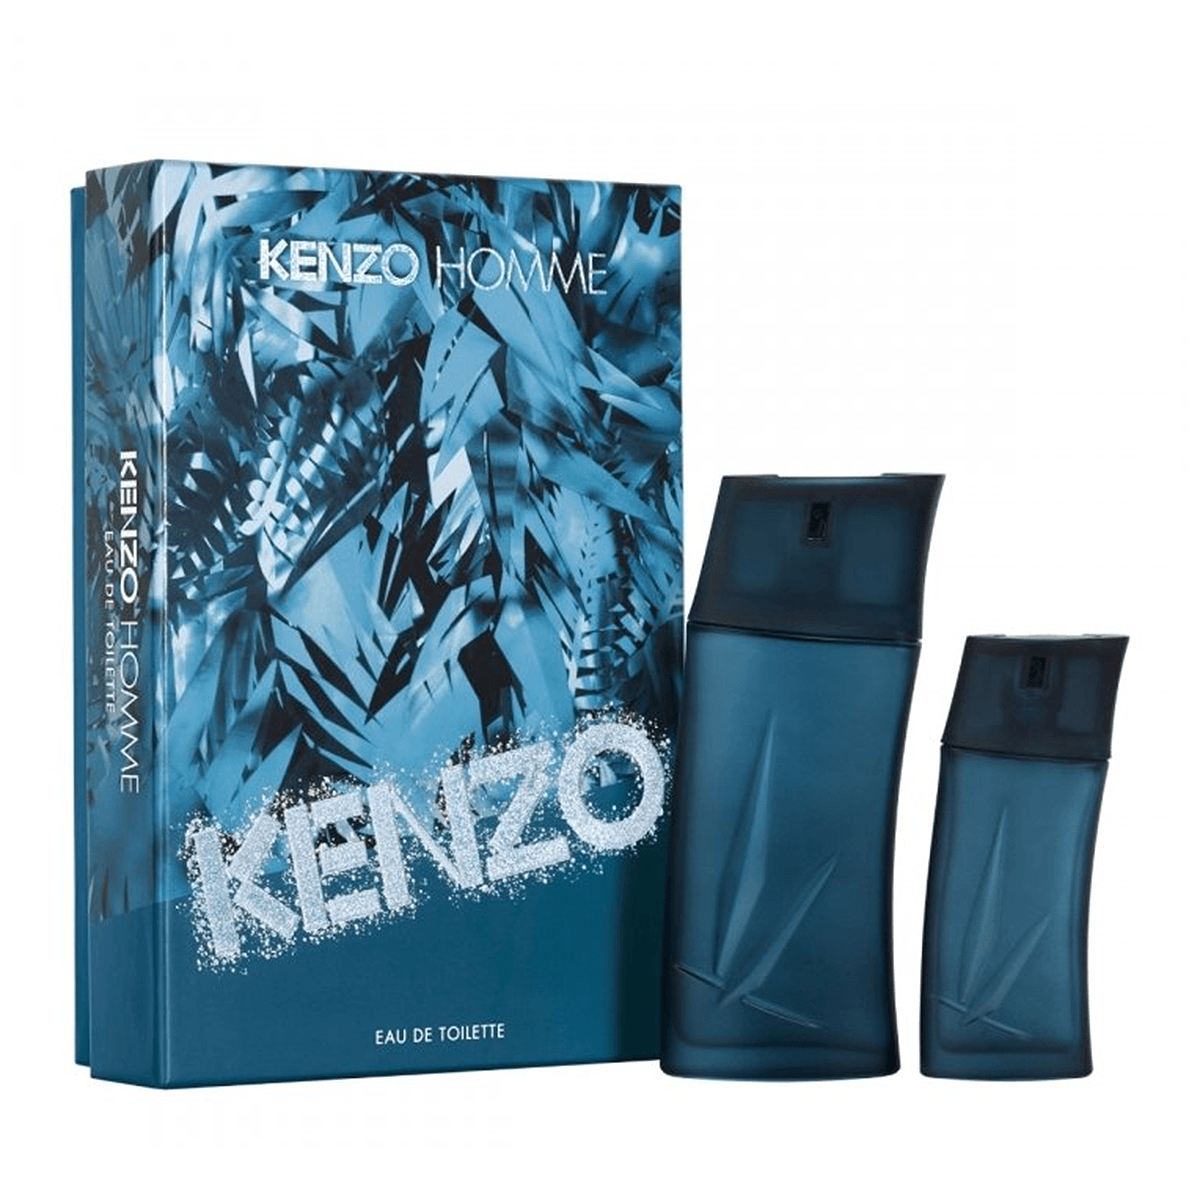 Kenzo Homme EDT Gift Set - My Perfume Shop Australia